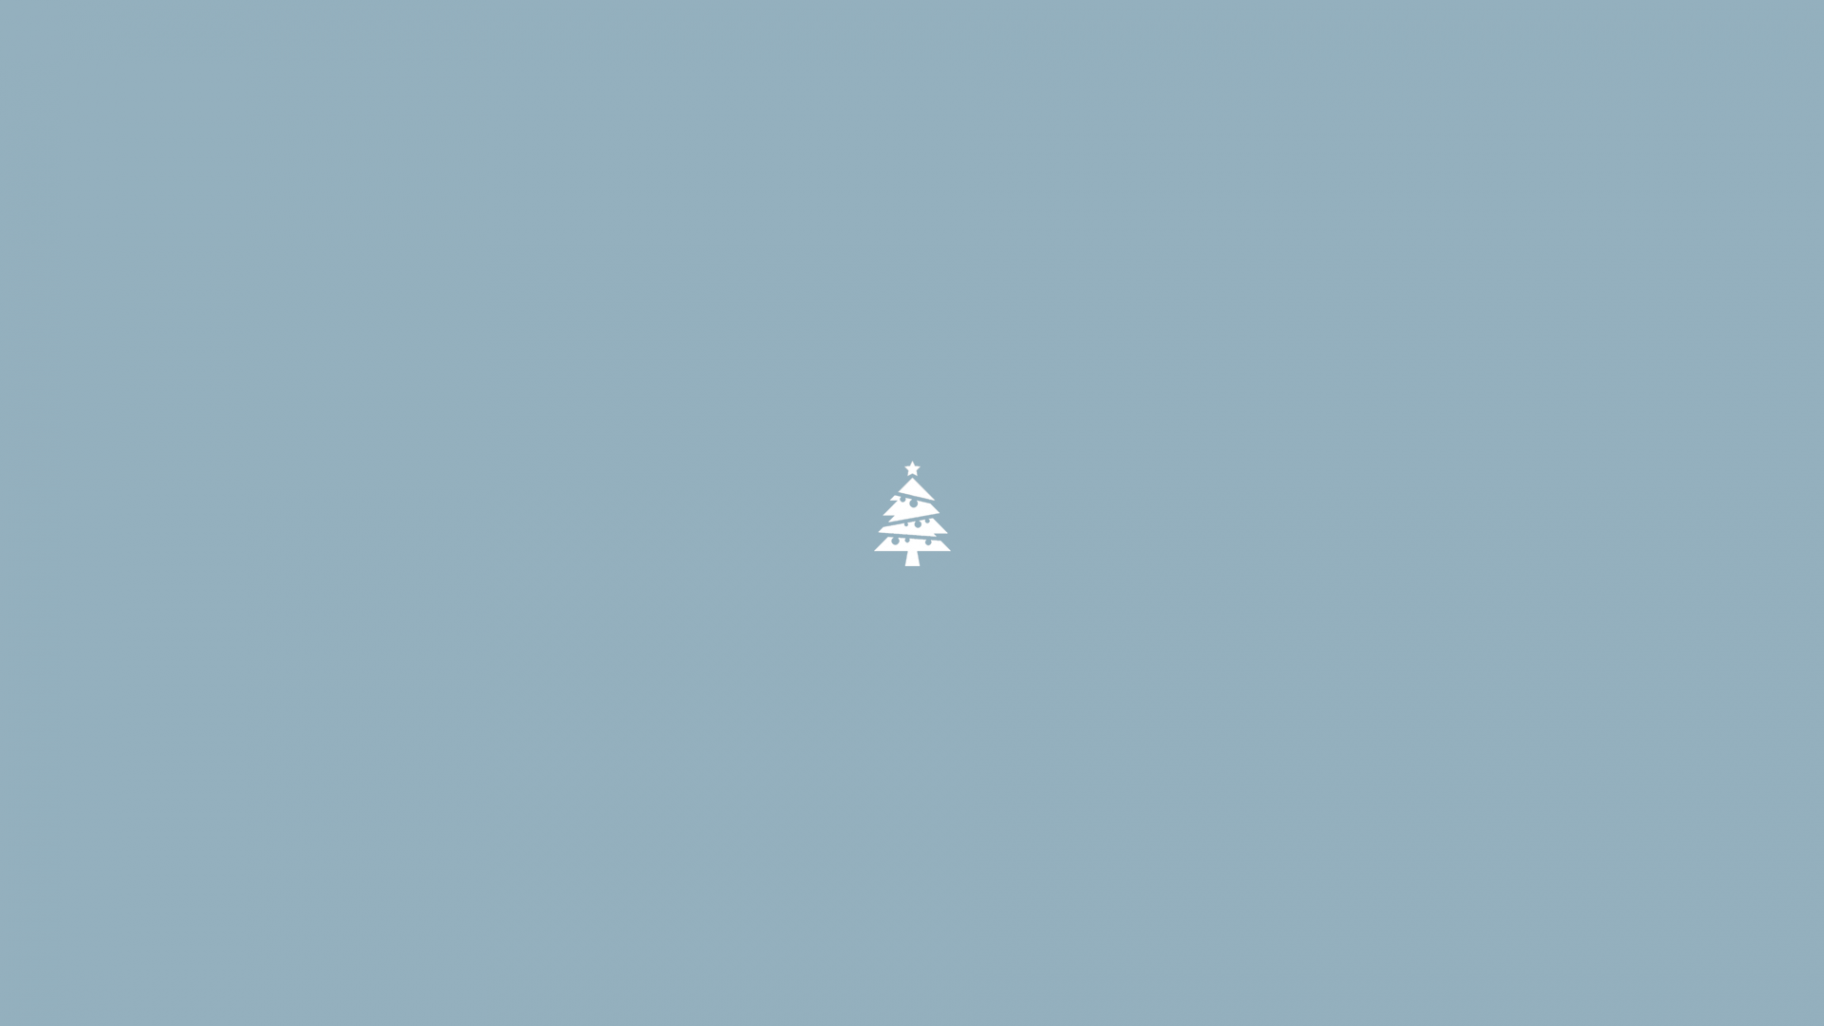 Minimalist Christmas tree wallpaper [x]  Christmas